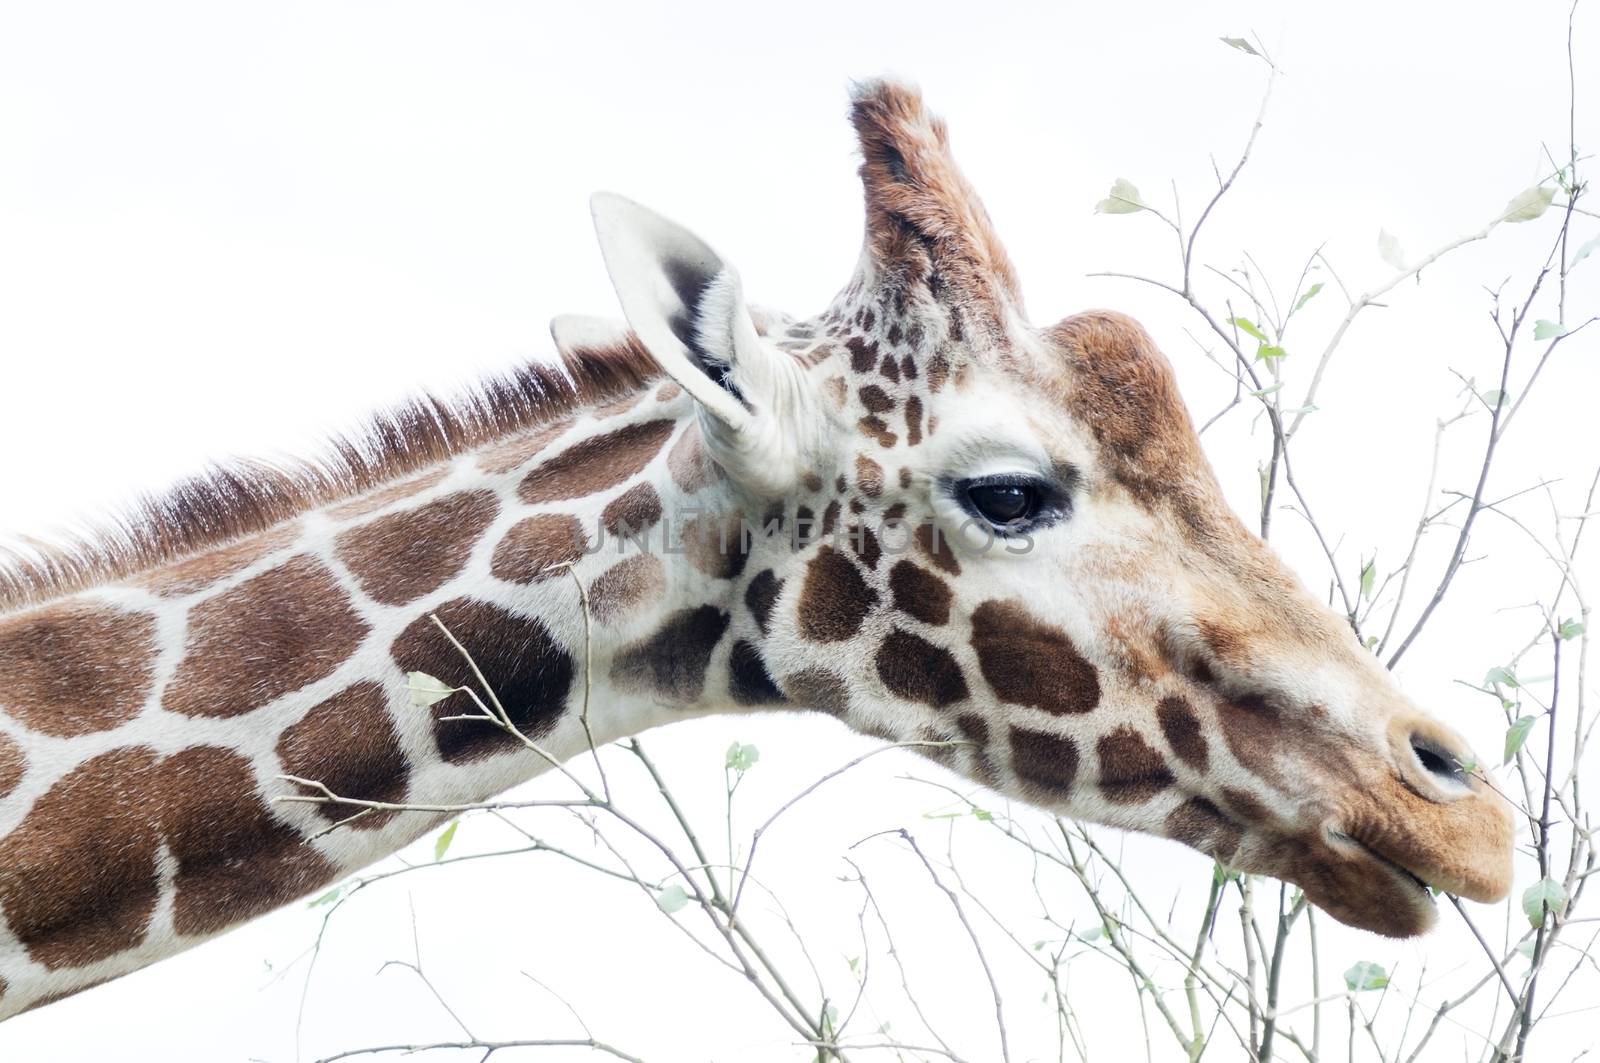 Giraffe feeding by kmwphotography